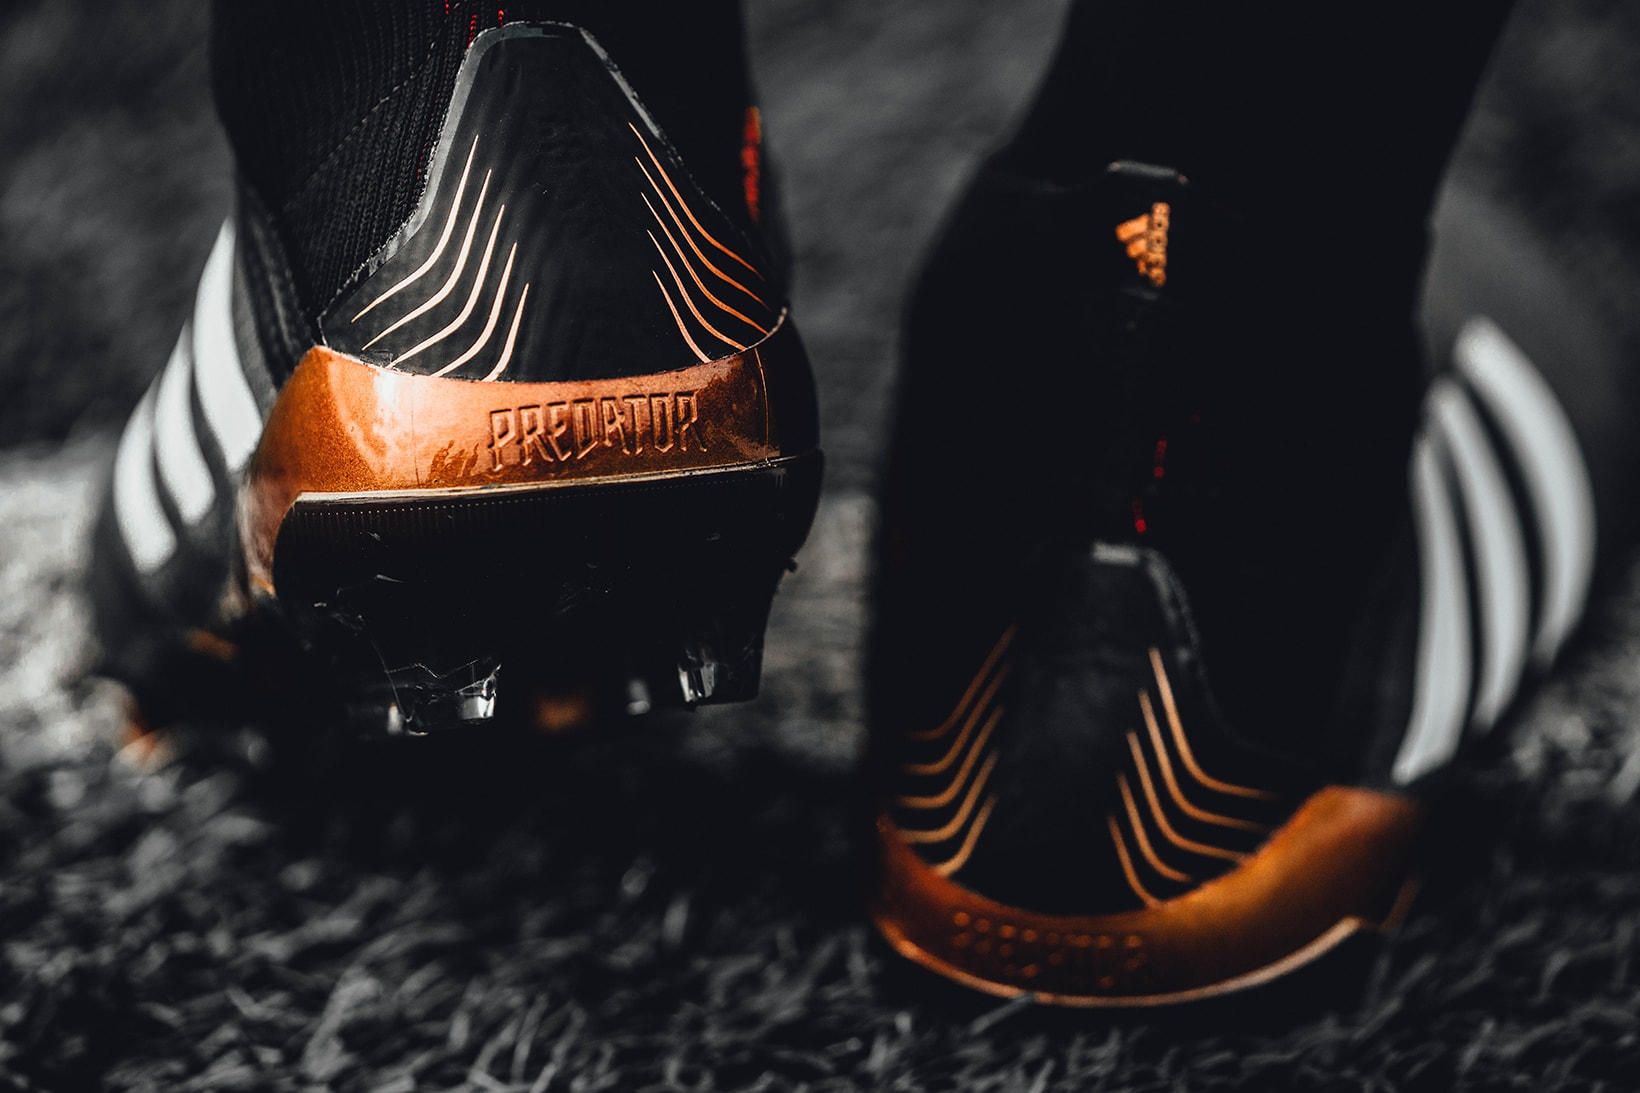 adidas Soccer Predator 18+ Stadium Cage Street Cleats Football Boots BOOST Paul Pogba Mesut Ozil Dele Alli